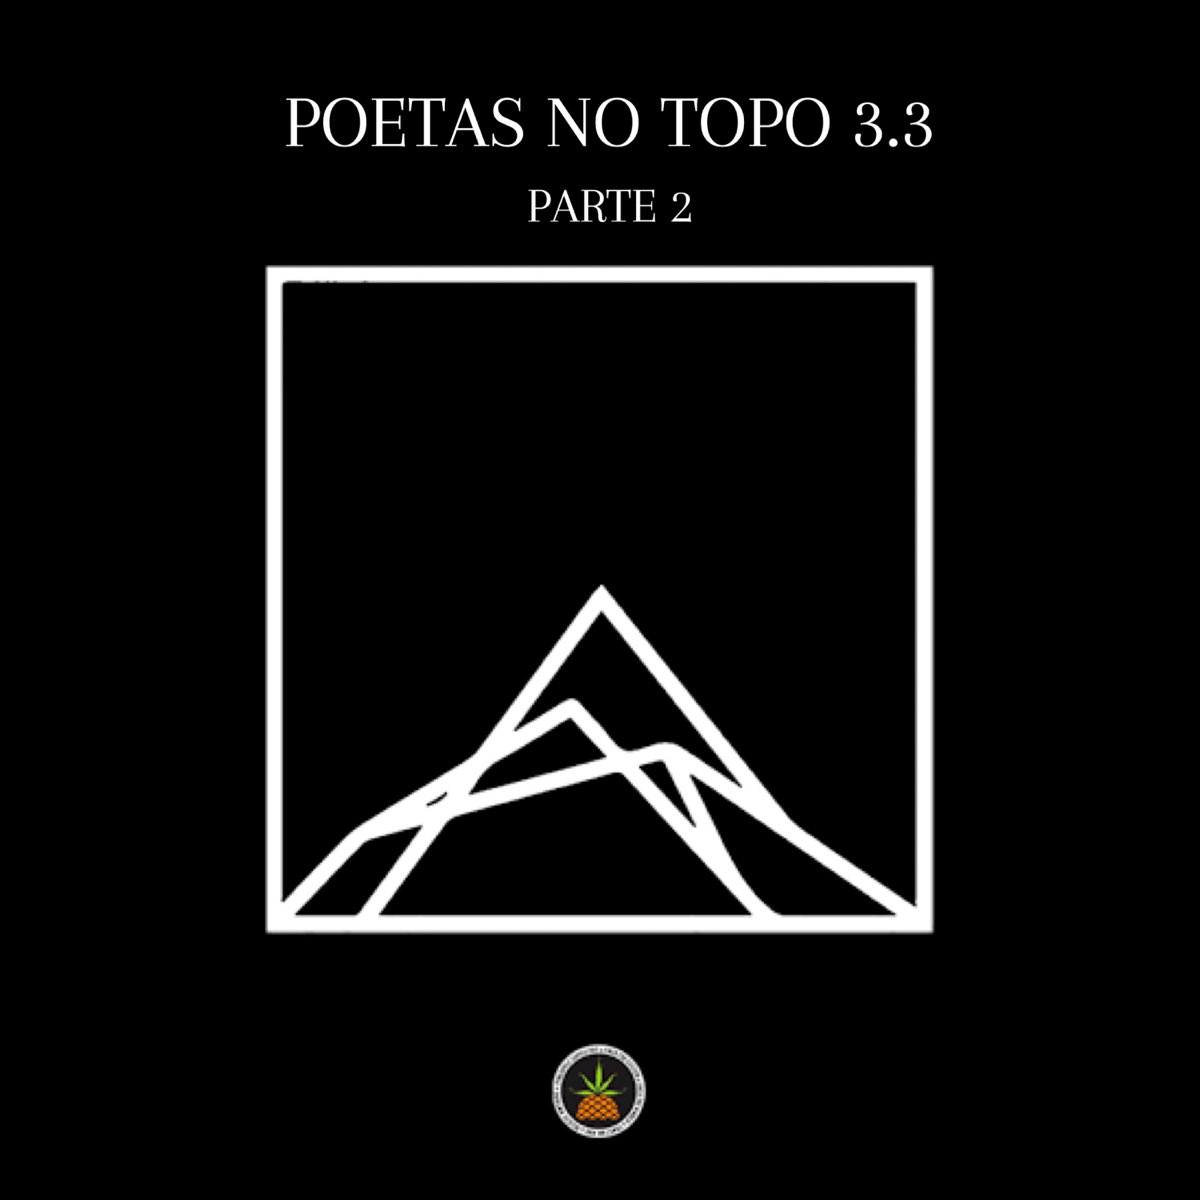 Poetas No Topo 3.3 - Parte 2 - Pineapple 